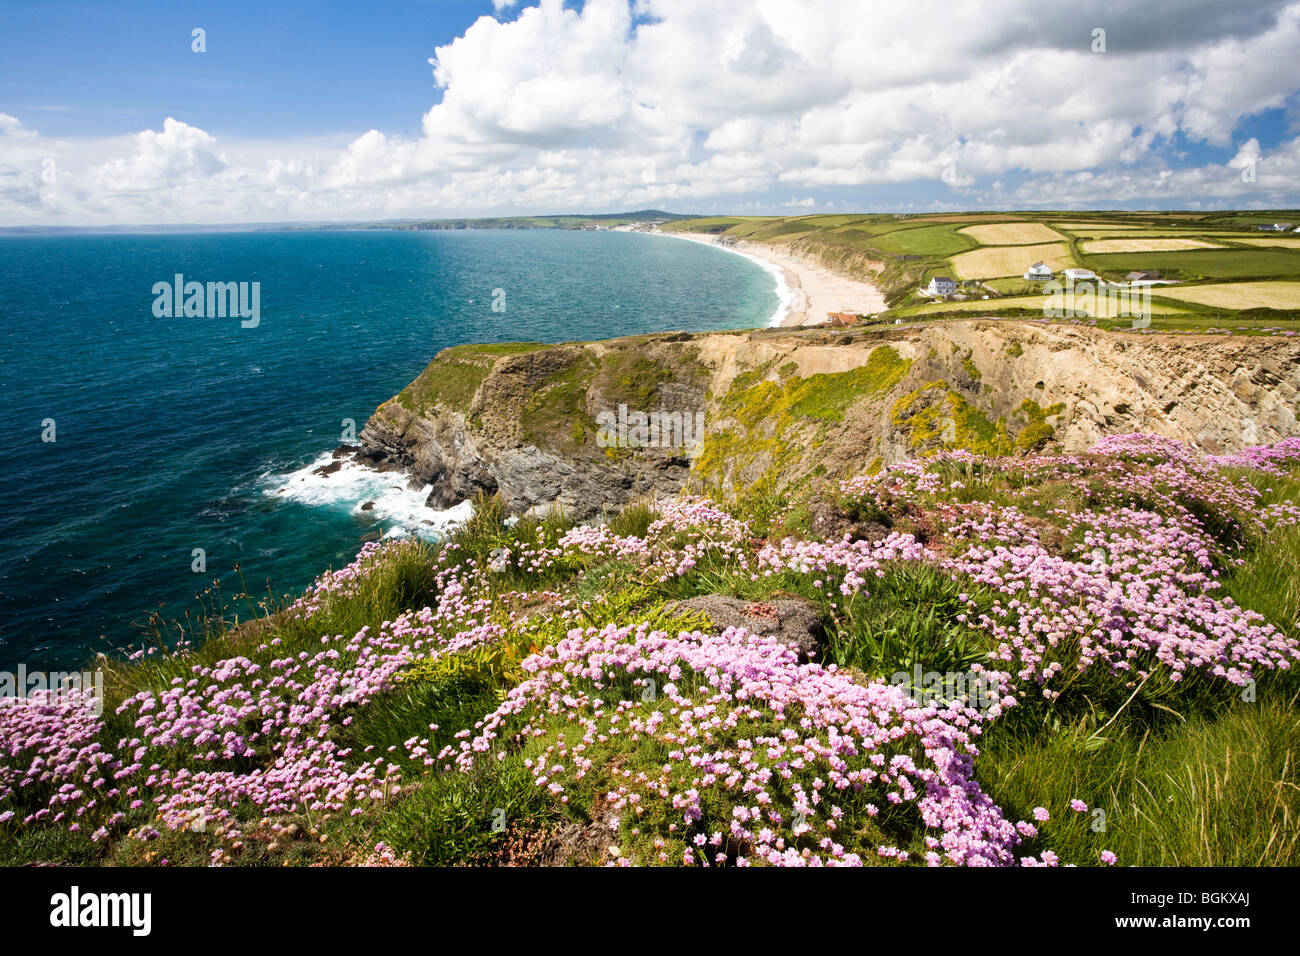 Sea pinks or Thrift (Armeria maritinum) on the coast near Gunwalloe Fishing Cove, Cornwall England UK Stock Photo